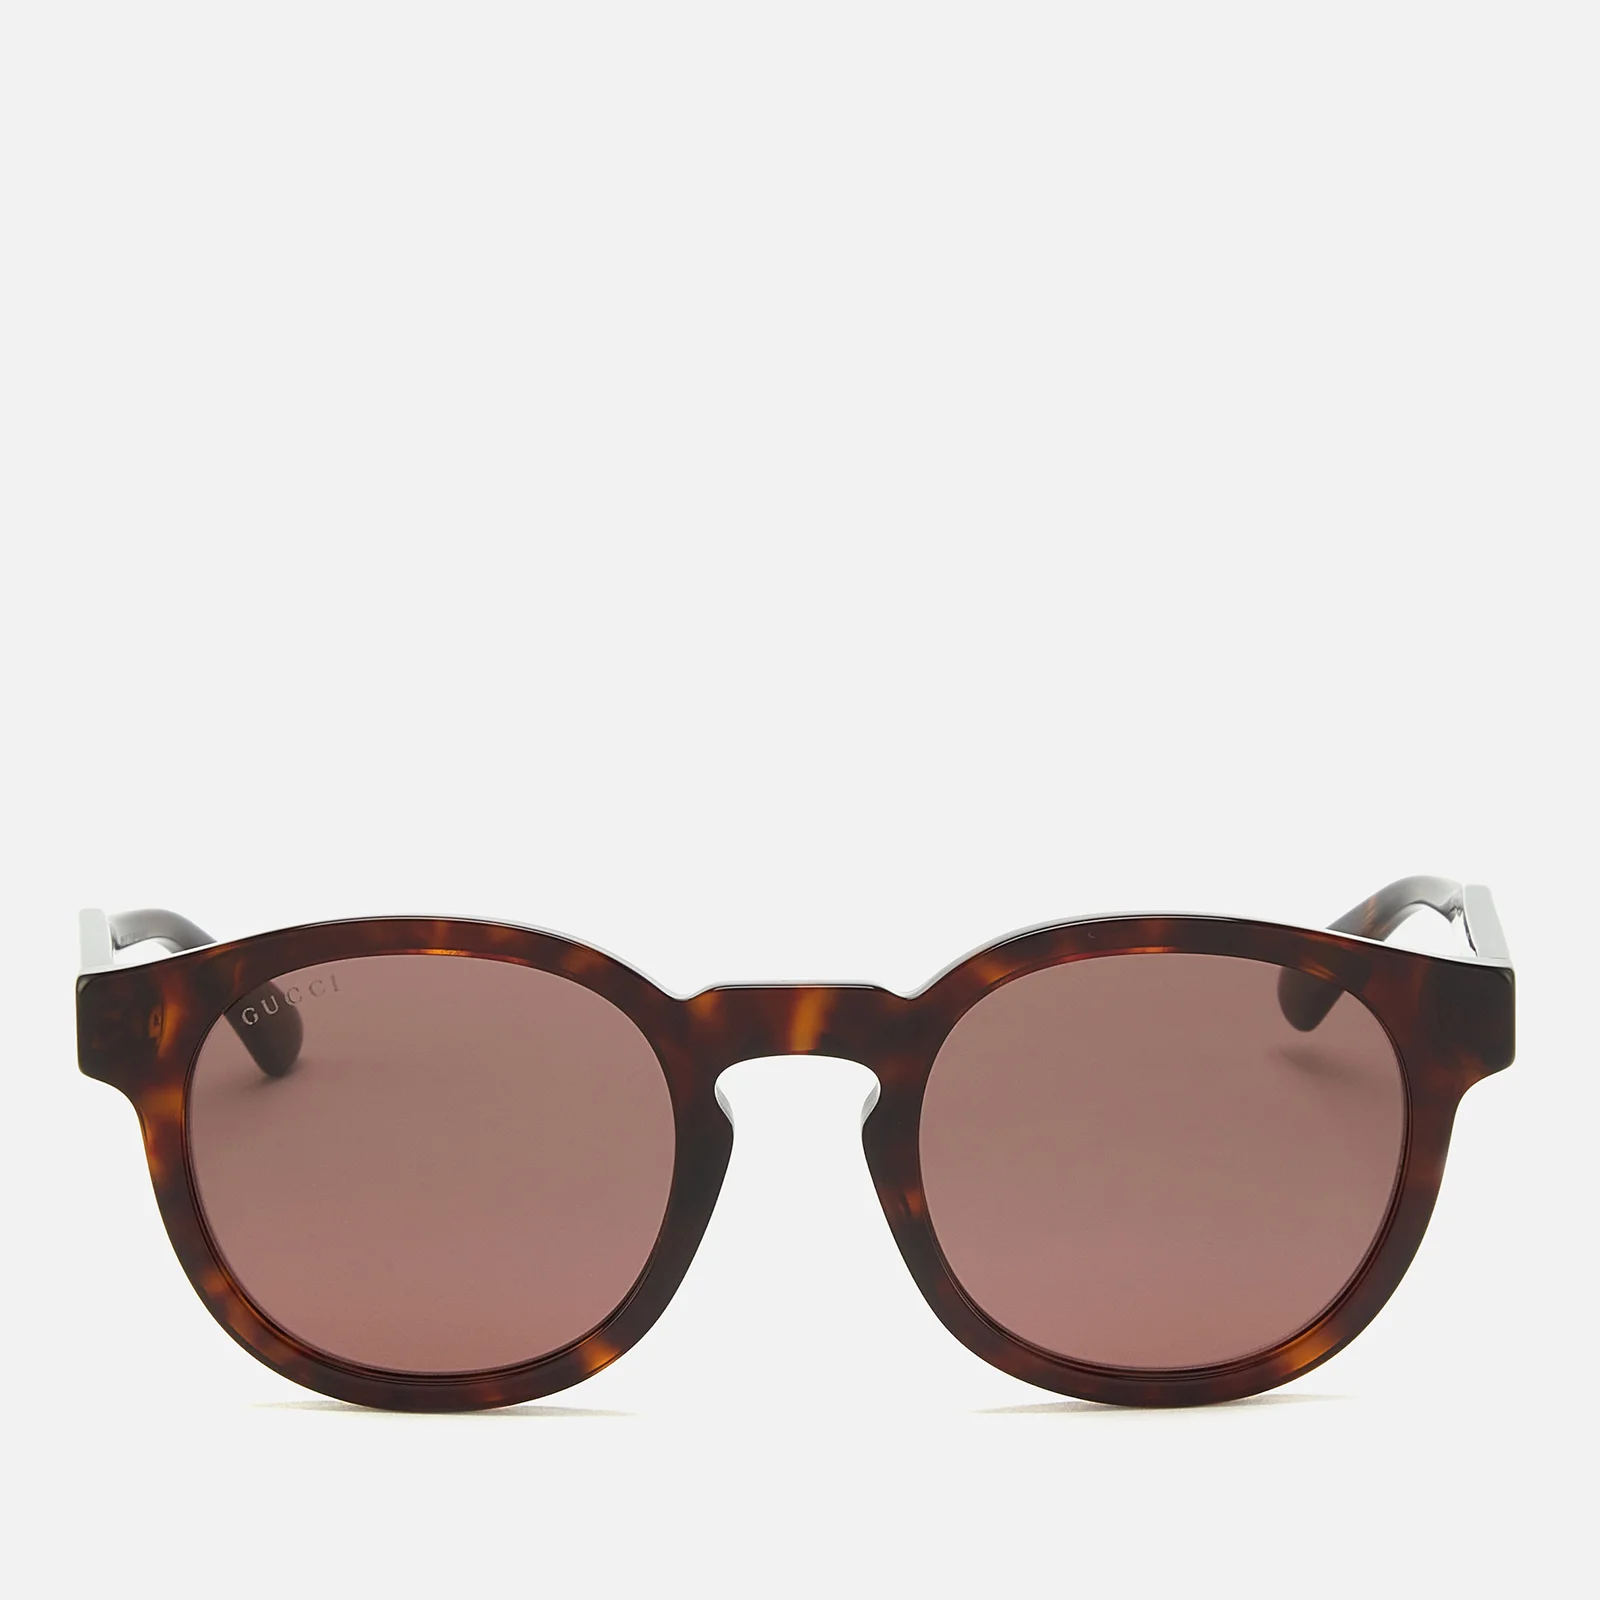 Gucci Men's Acetate Frame Sunglasses - Shiny Dark Havana Image 1